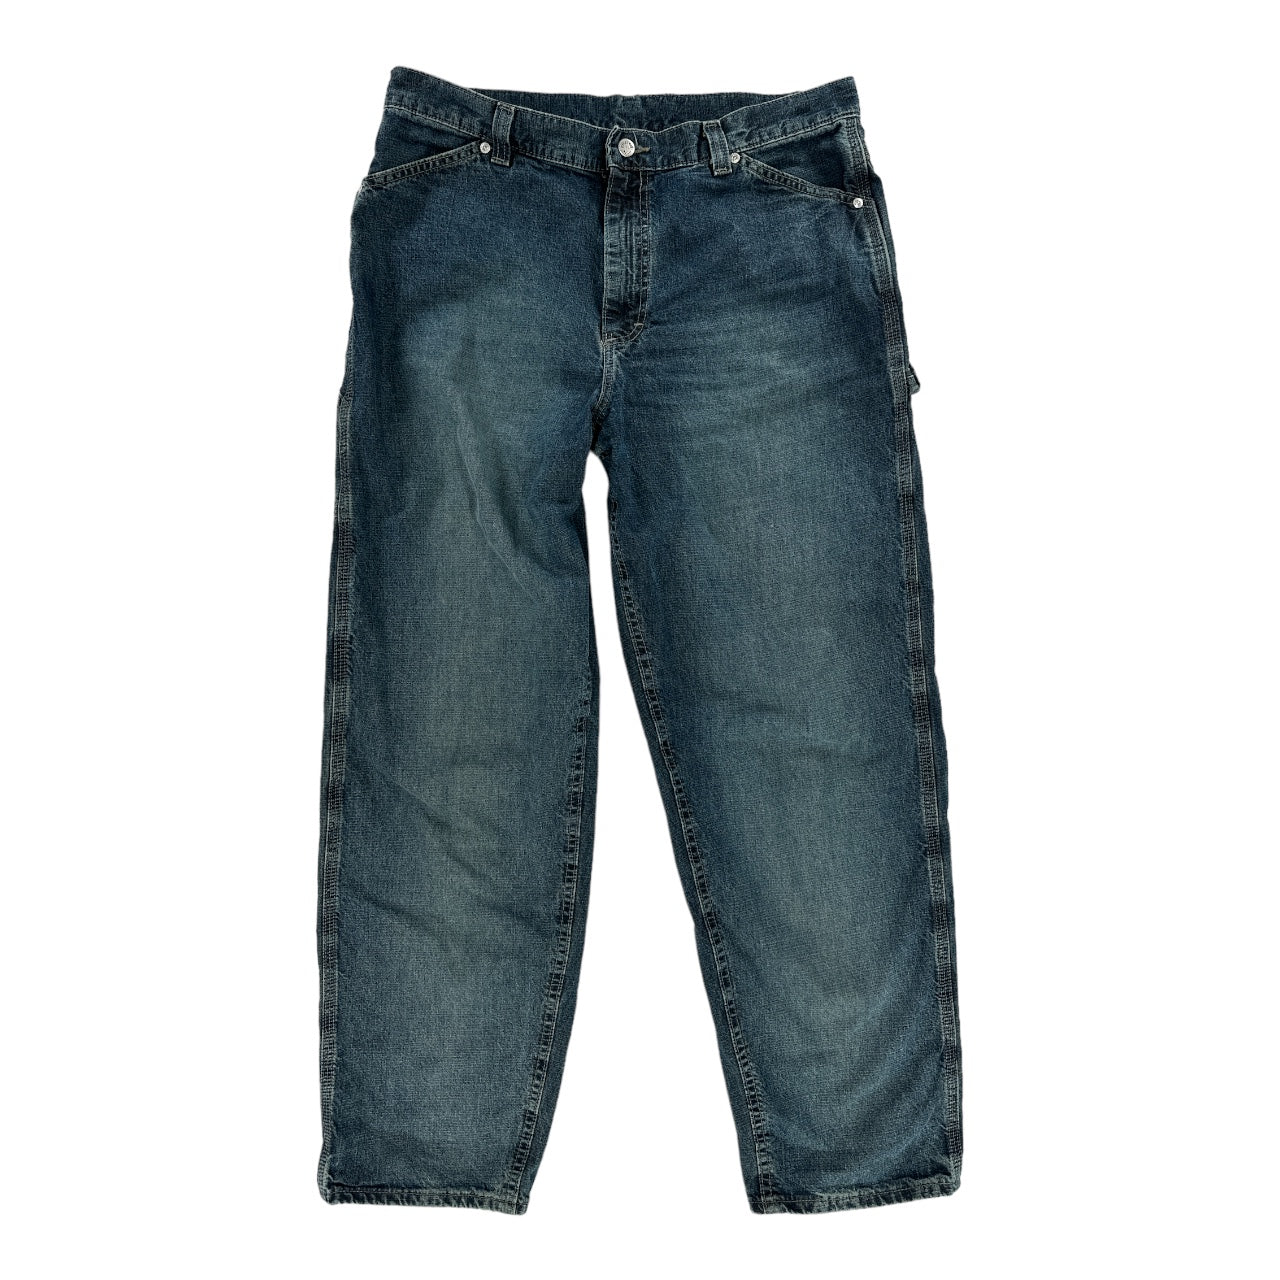 Vintage Lee Riveted Carpenter Jeans - Women's 36x32 (16 Medium)